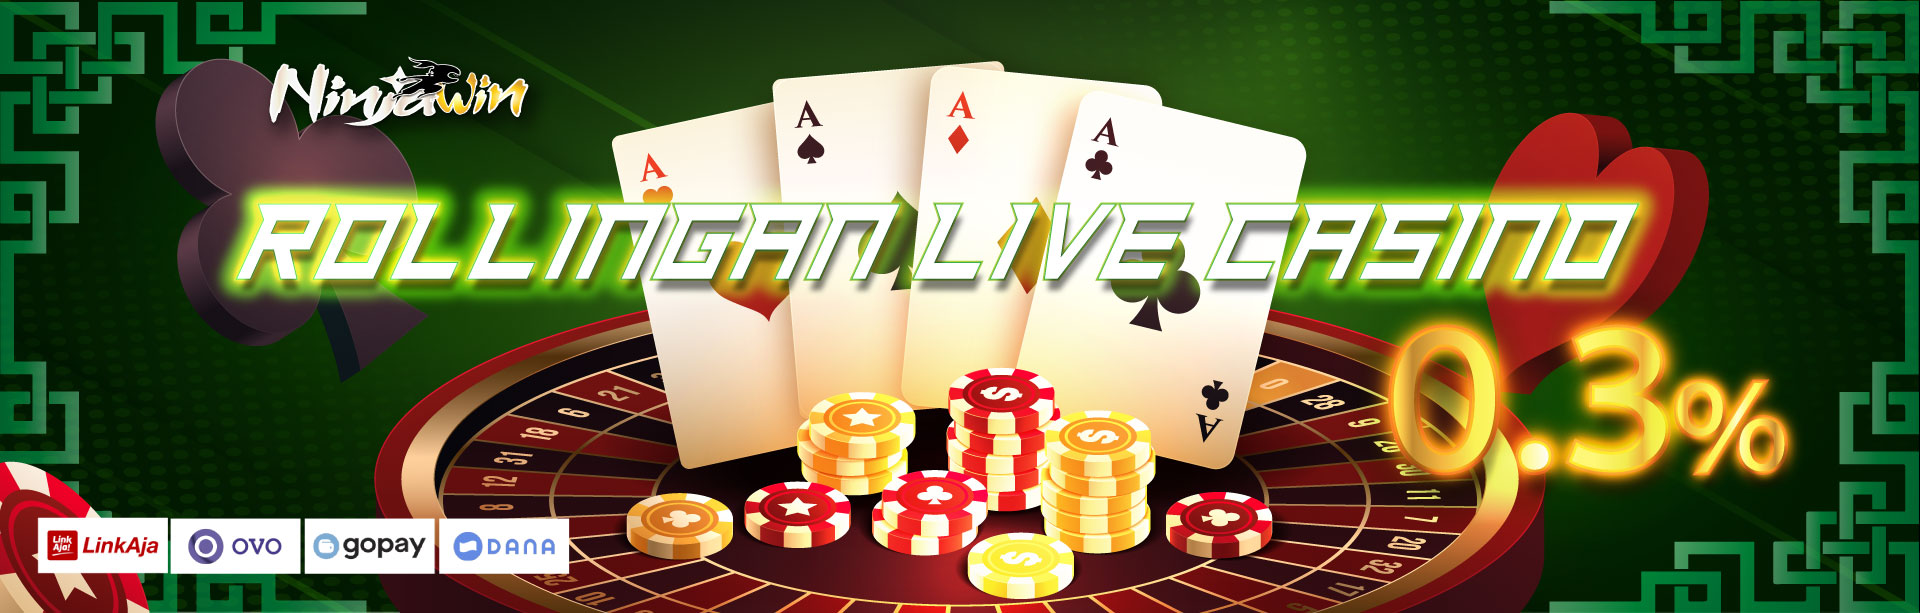 Bonus Rollingan Casino